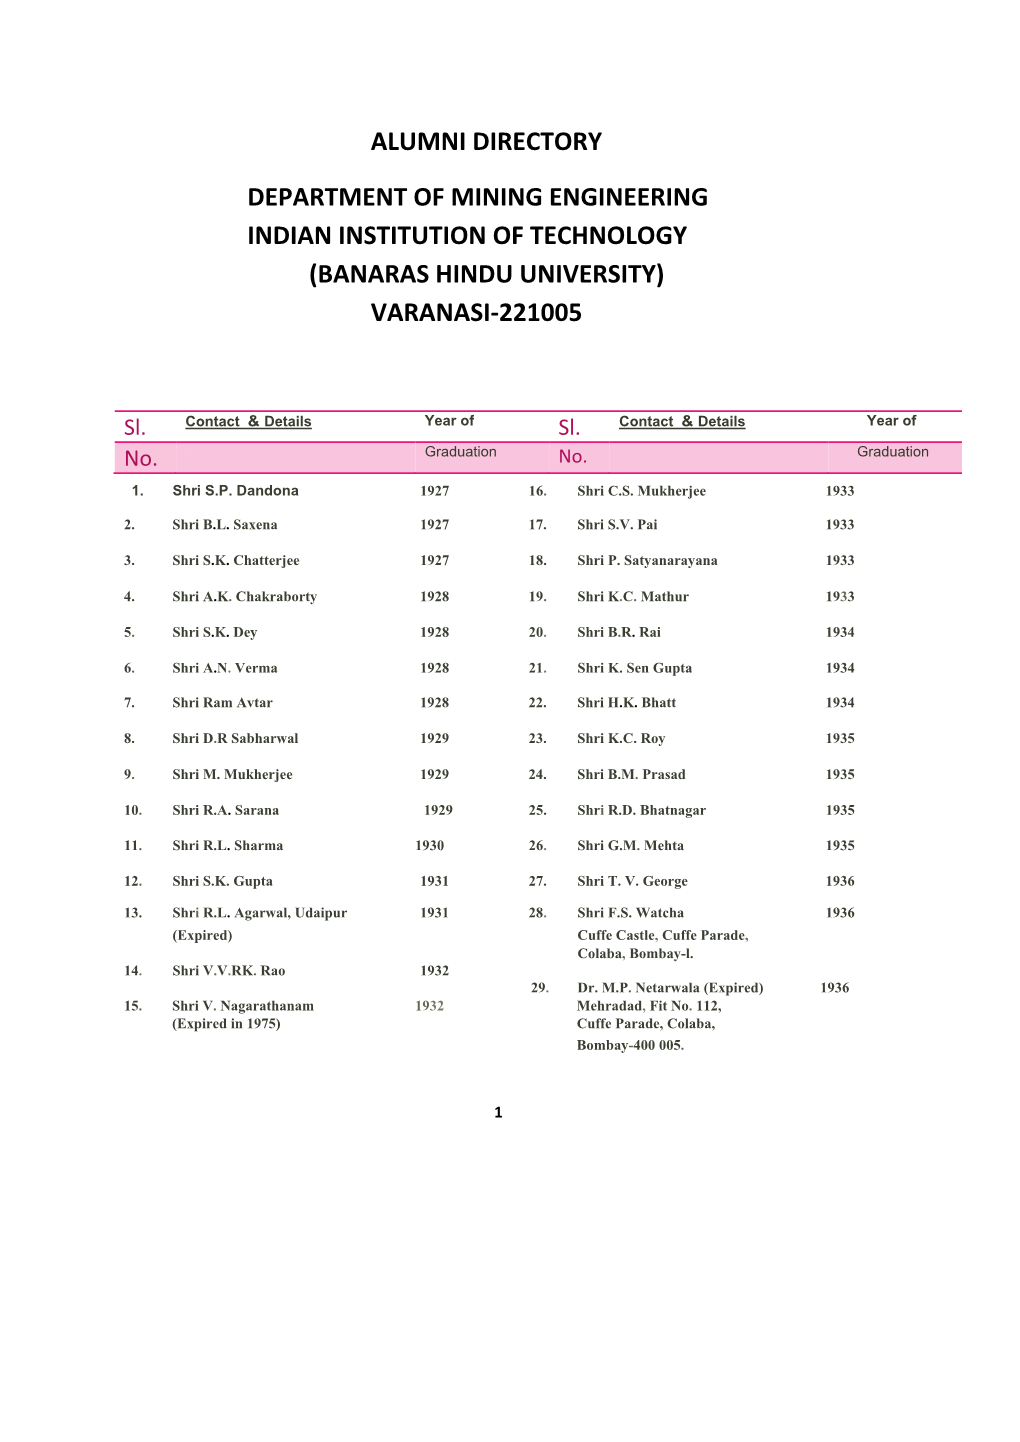 Alumni Directory Department of Mining Engineering Indian Institution of Technology (Banaras Hindu University) Varanasi-221005